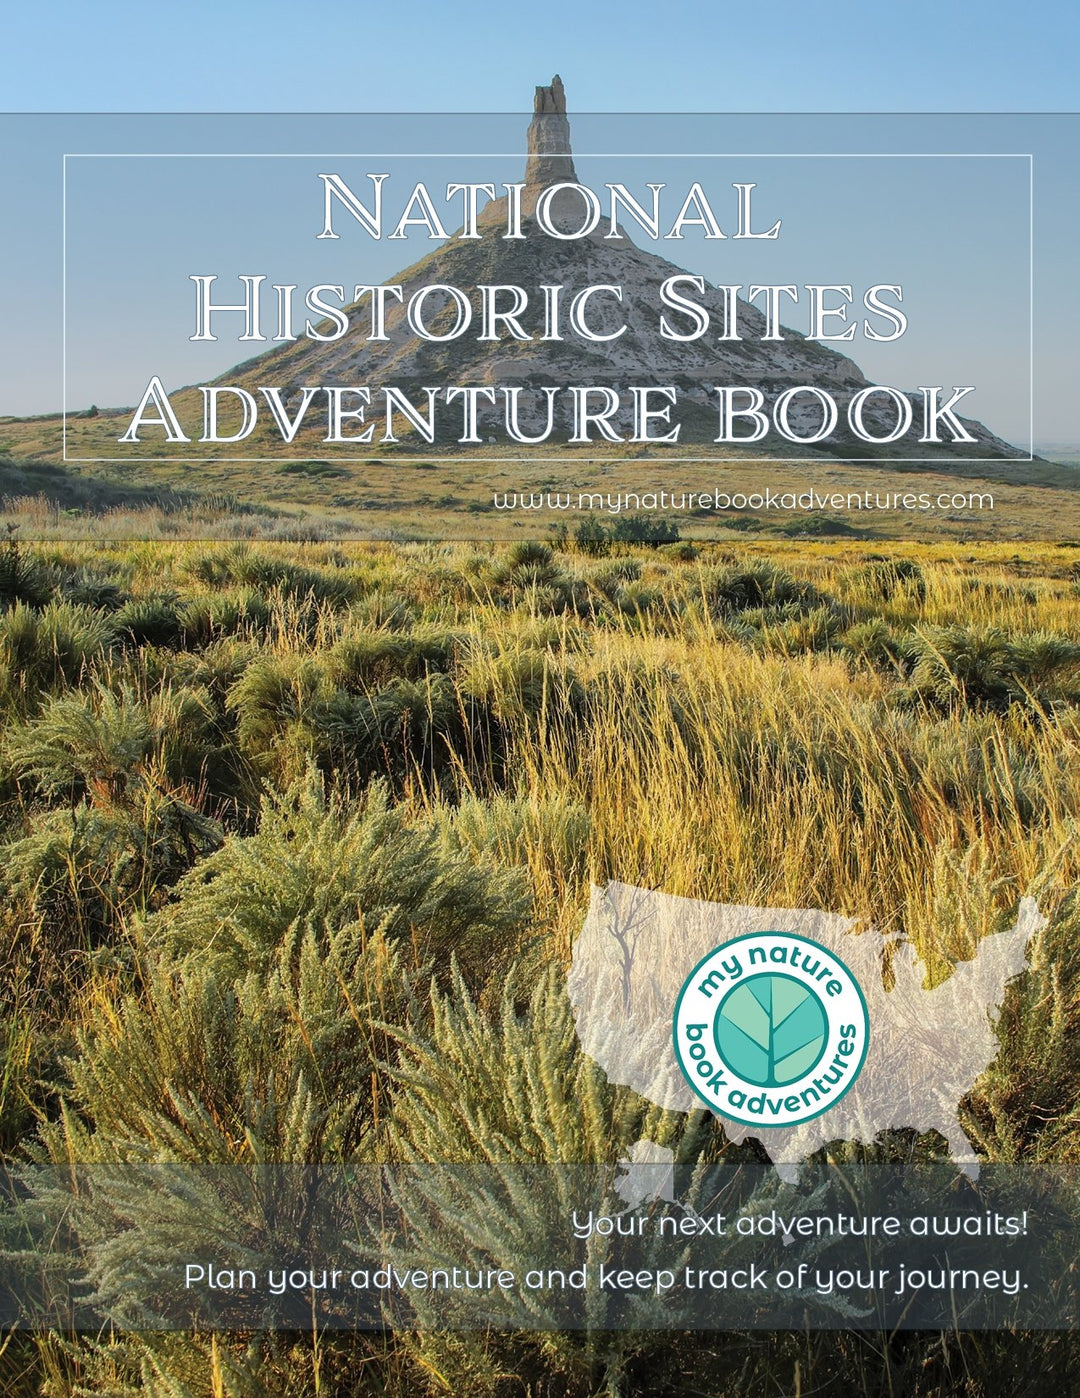 National Historic Sites - DIGITAL DOWNLOAD - Adventure Planning Journal - My Nature Book Adventures